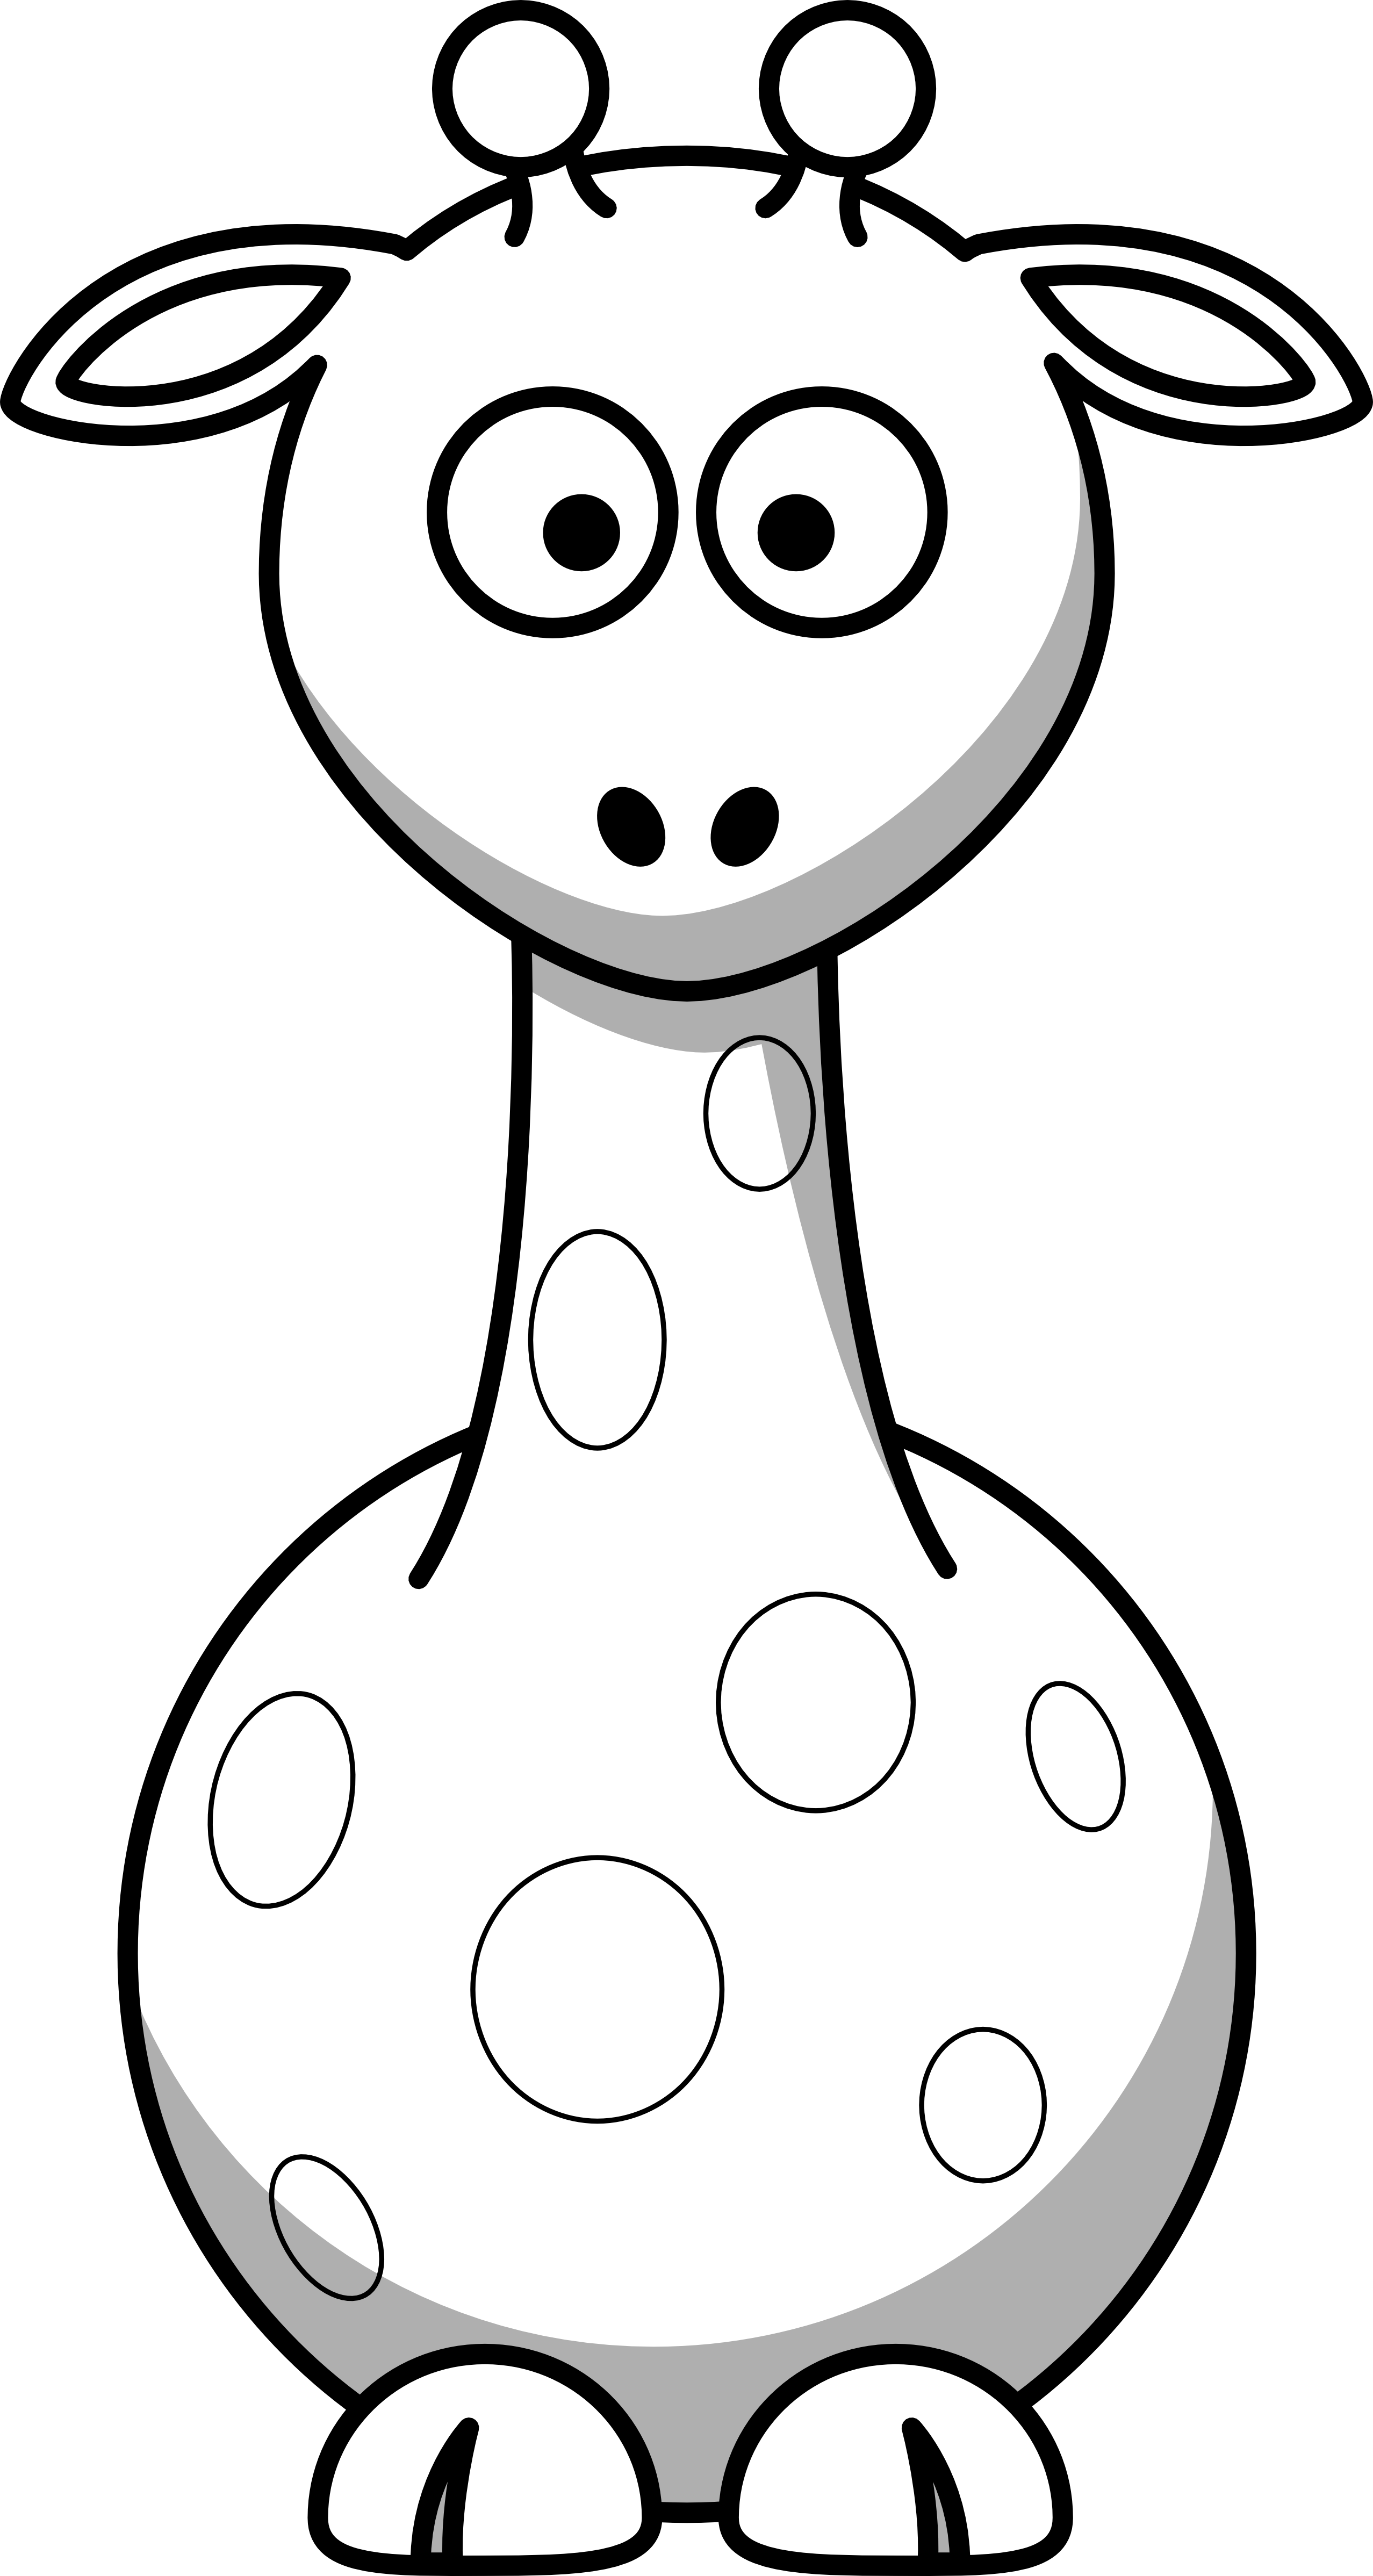 Baby Giraffe Clip Art Black And White | Clipart Panda - Free ...